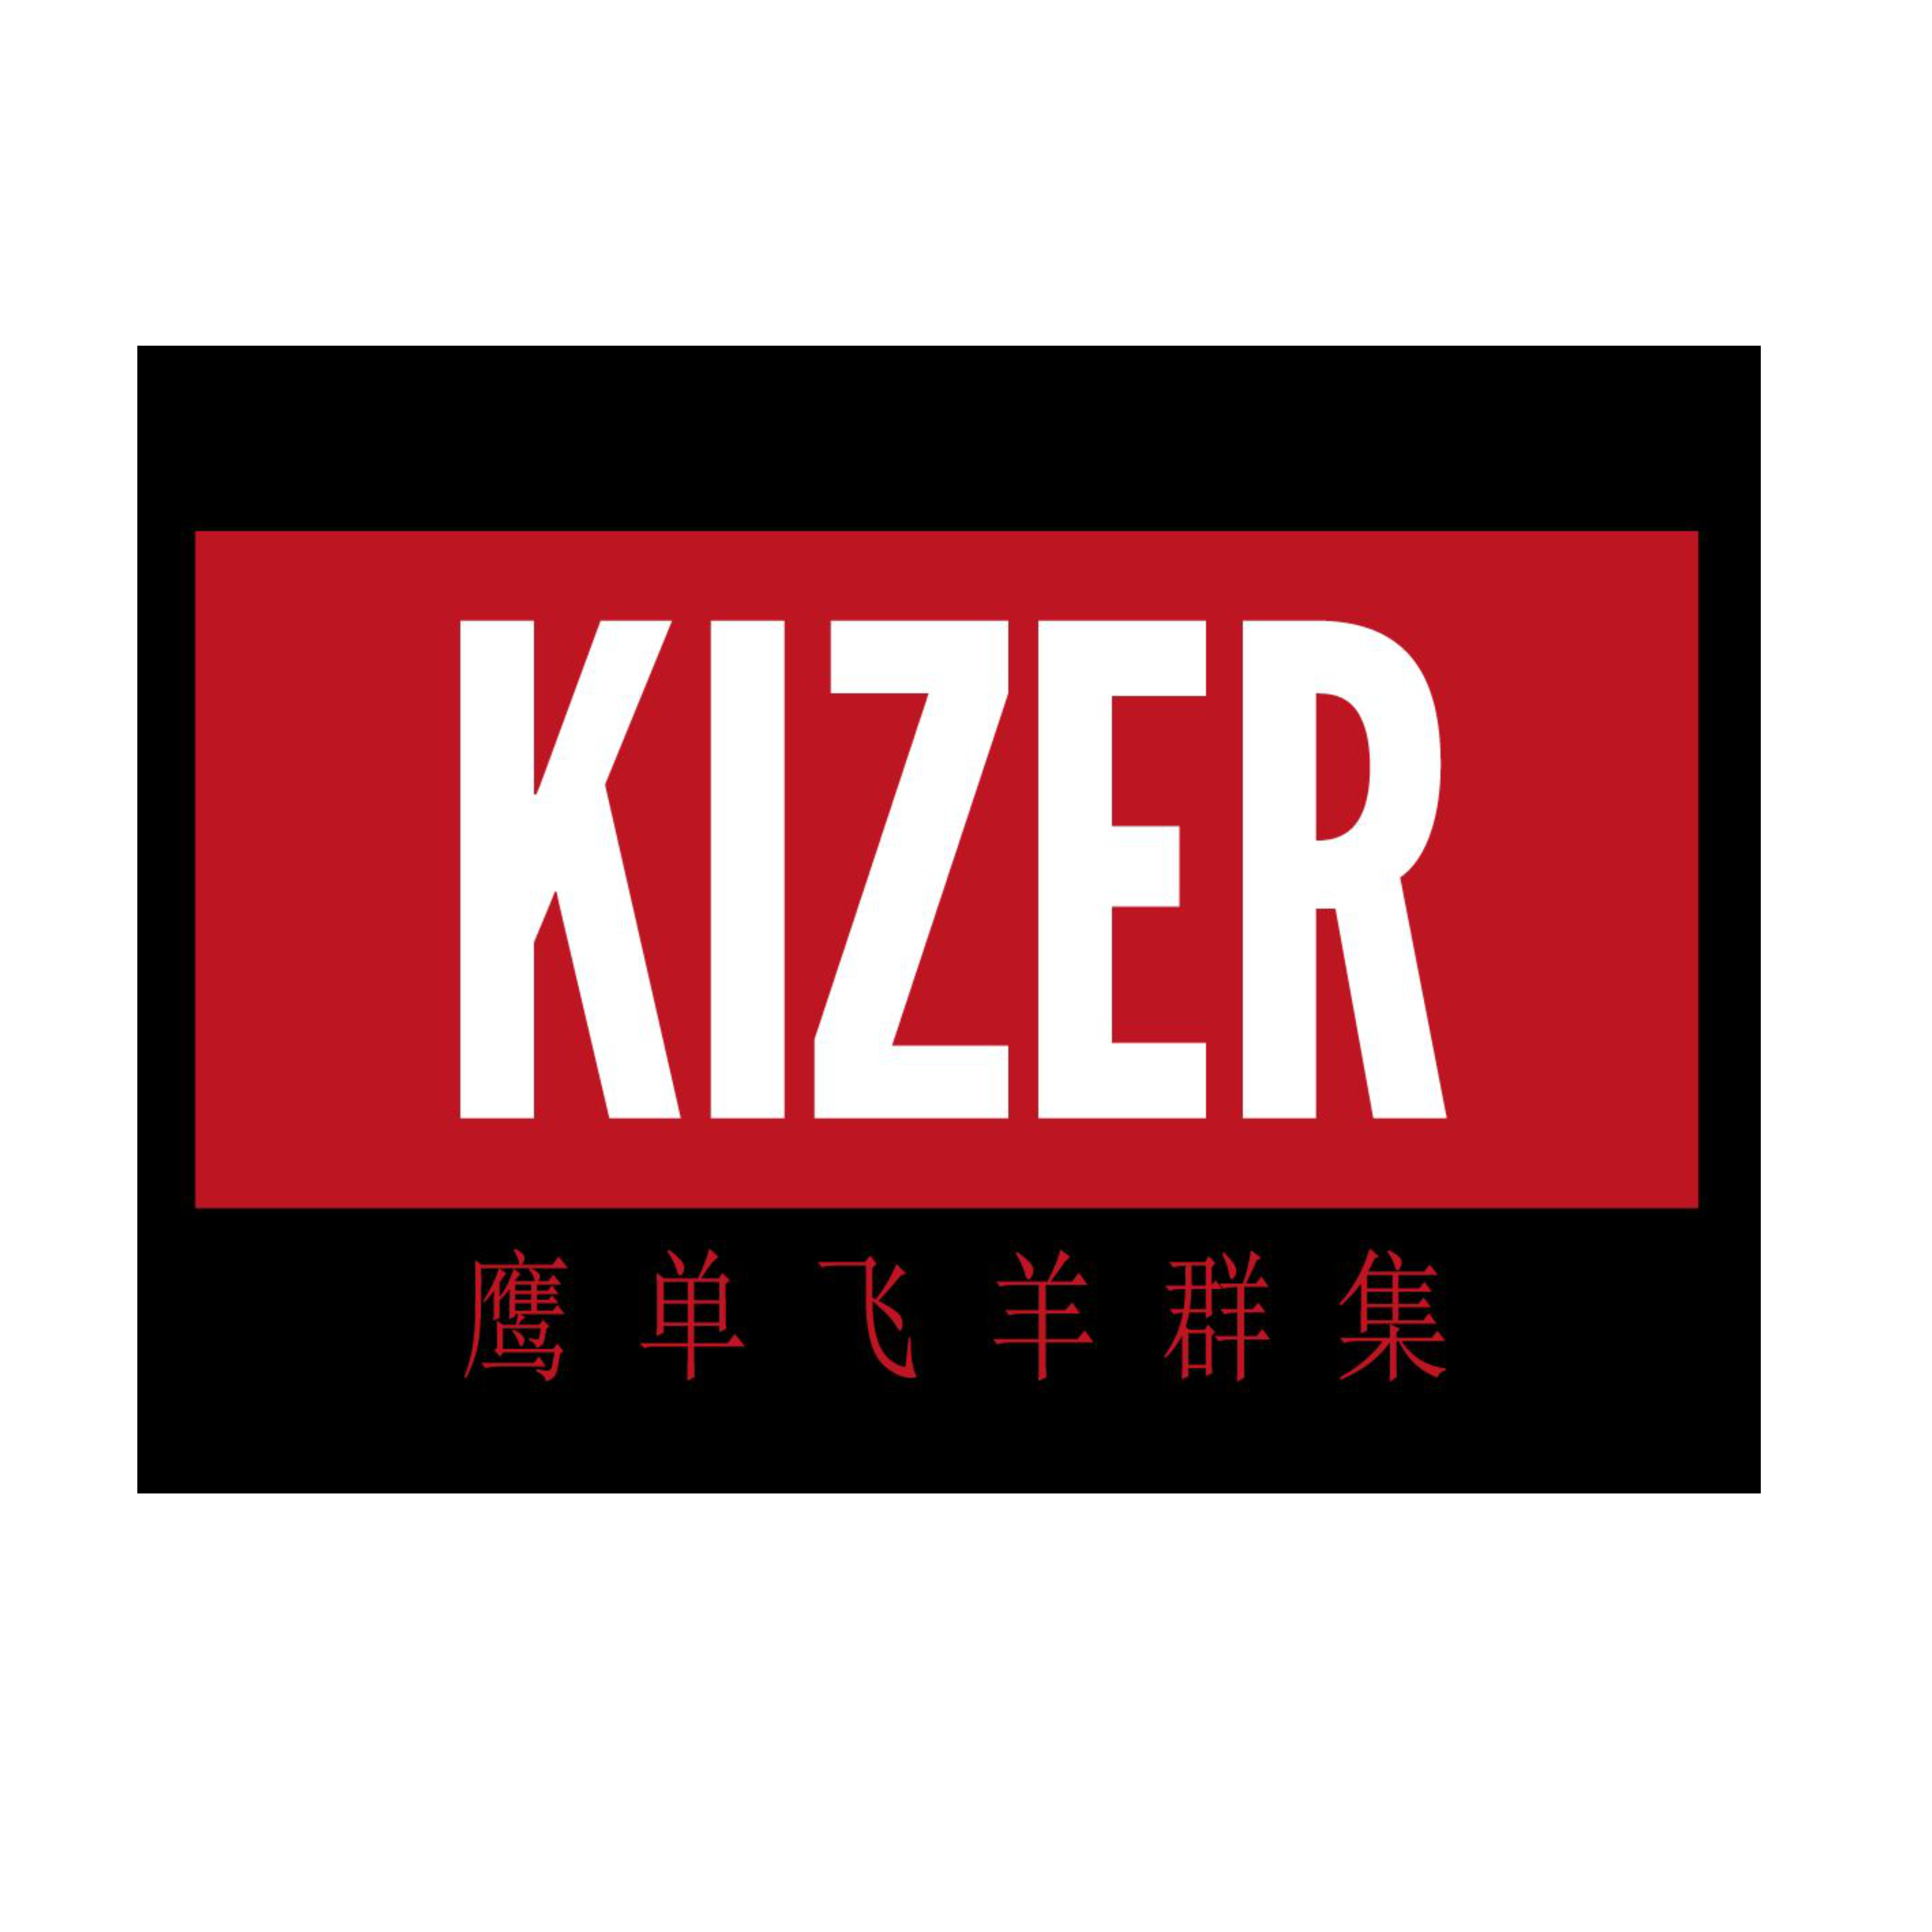 KIZER Drinks GmbH